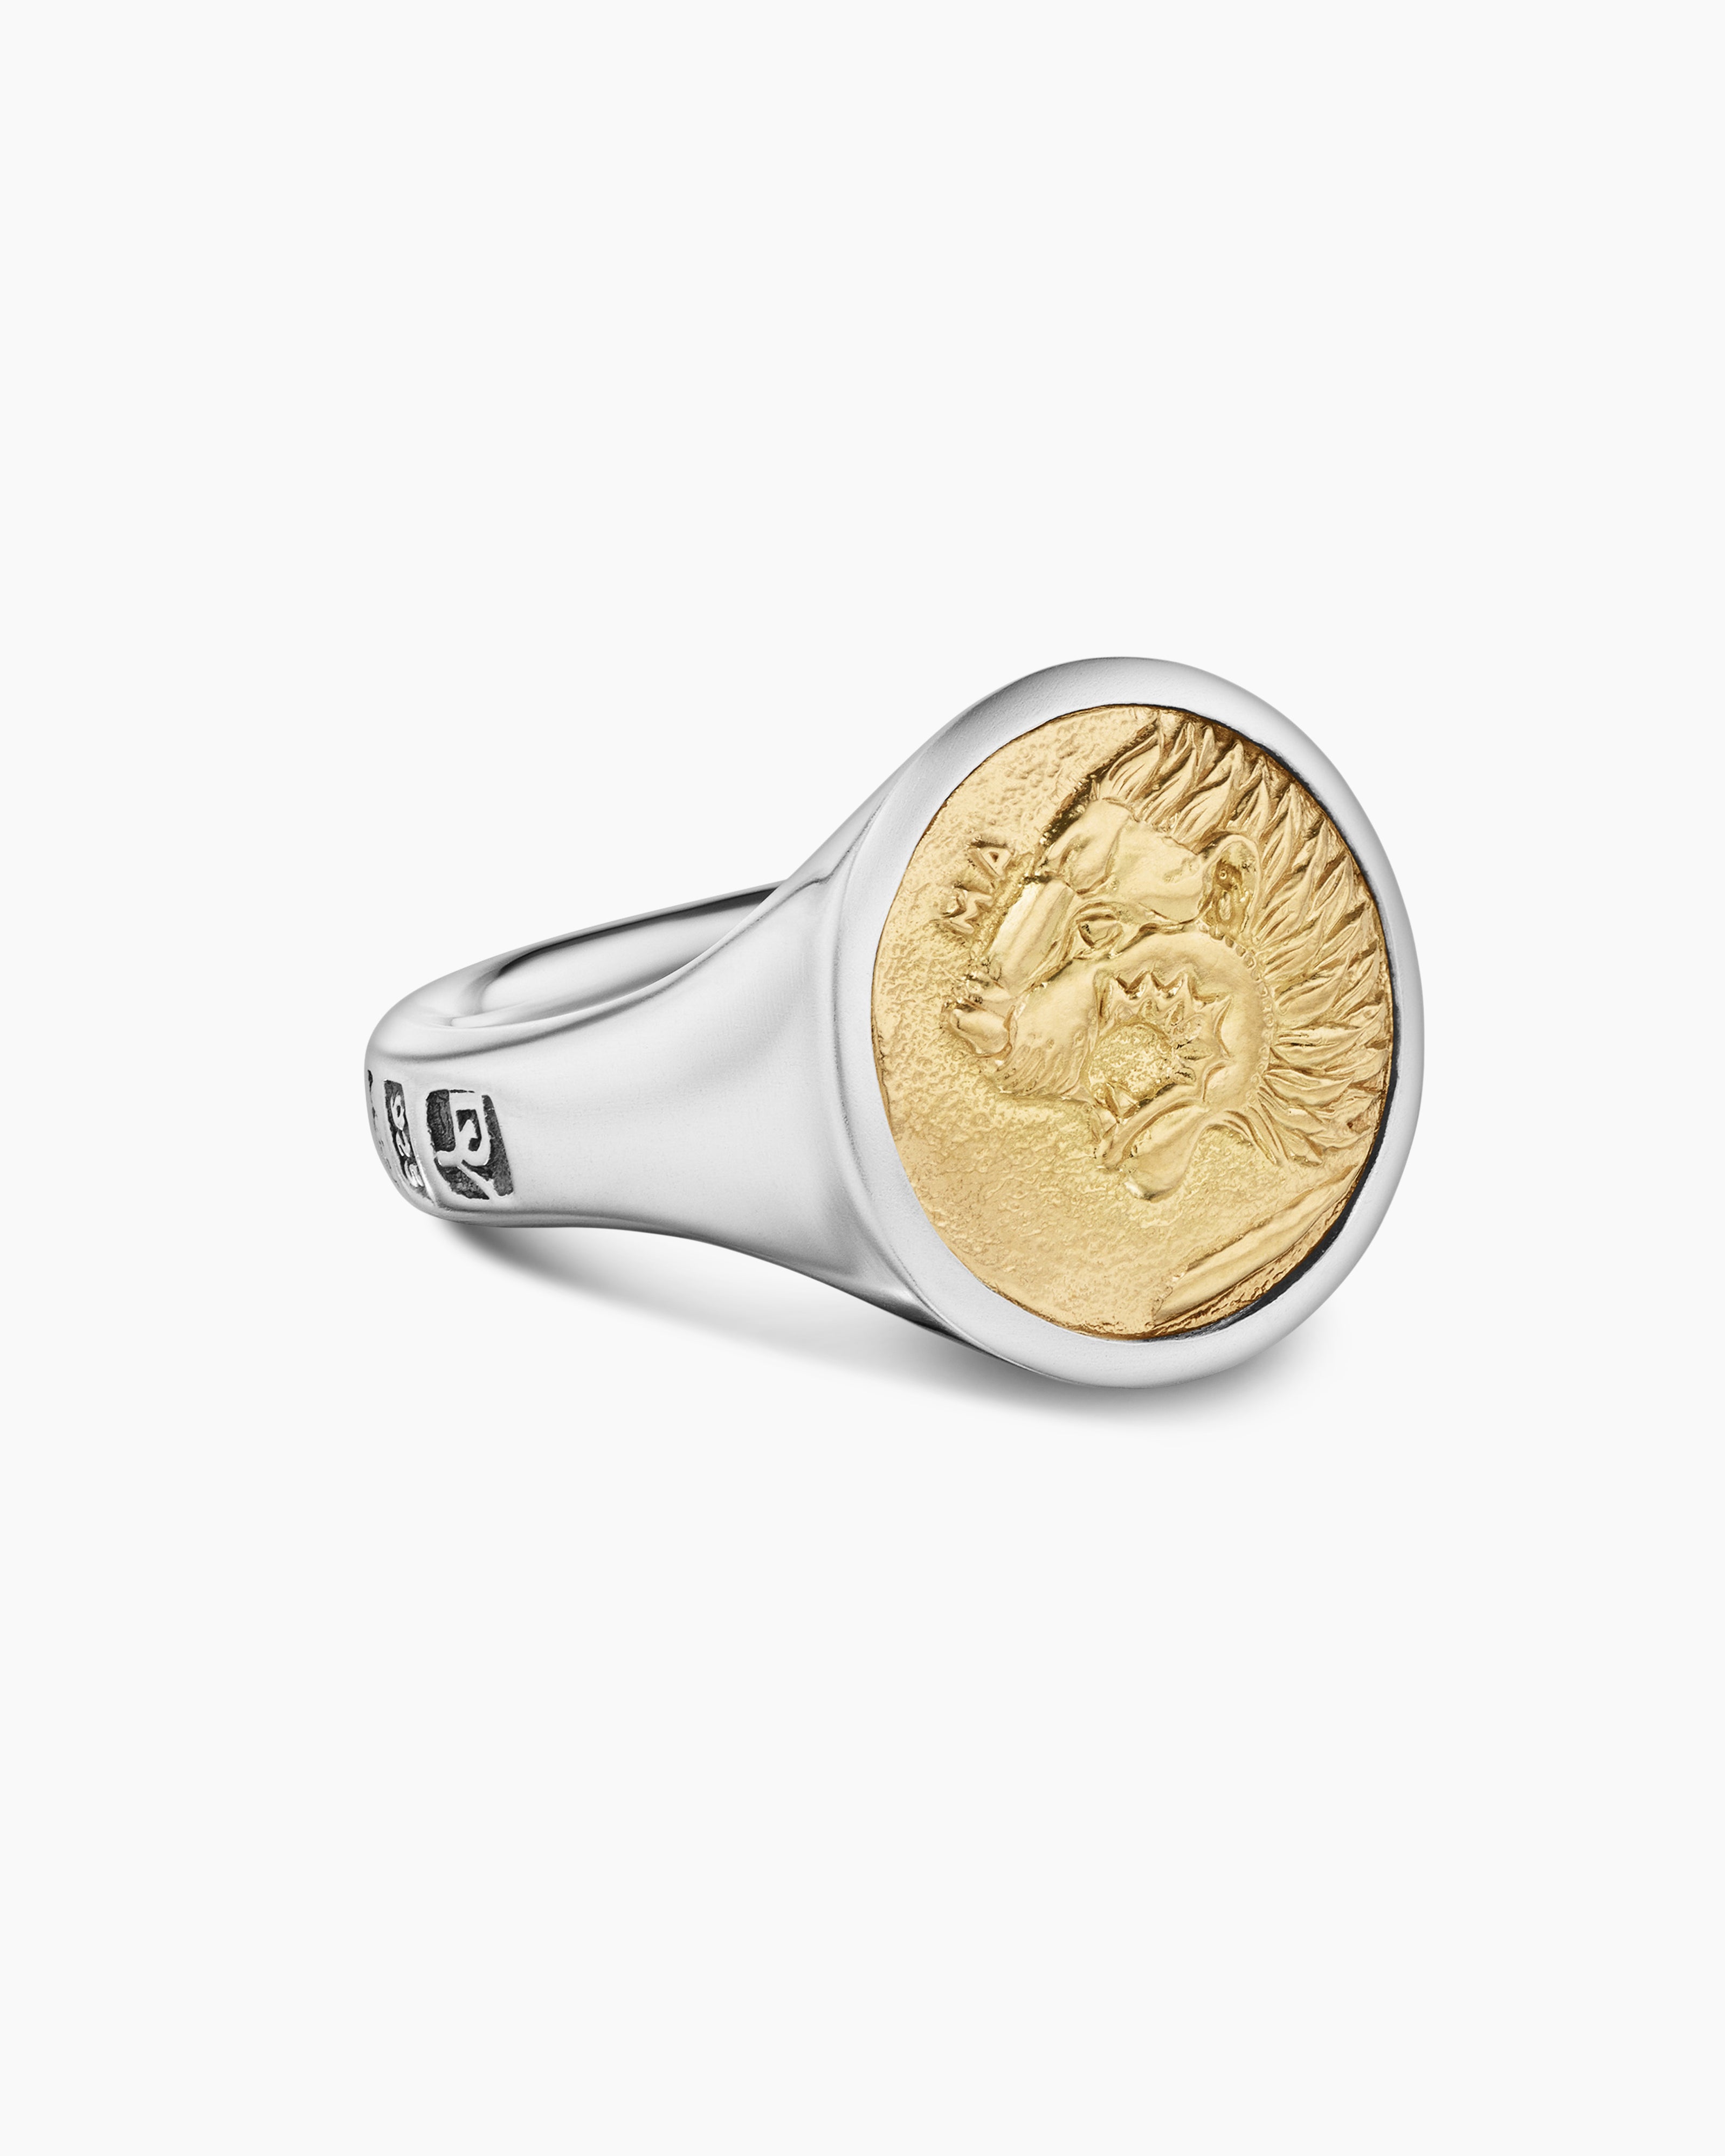 Masonic 24k Gold Lion Medallion Head Hip Hop Amazon Ring For Men And Women  Free Jewelry From Chengzhisuda, $3.66 | DHgate.Com